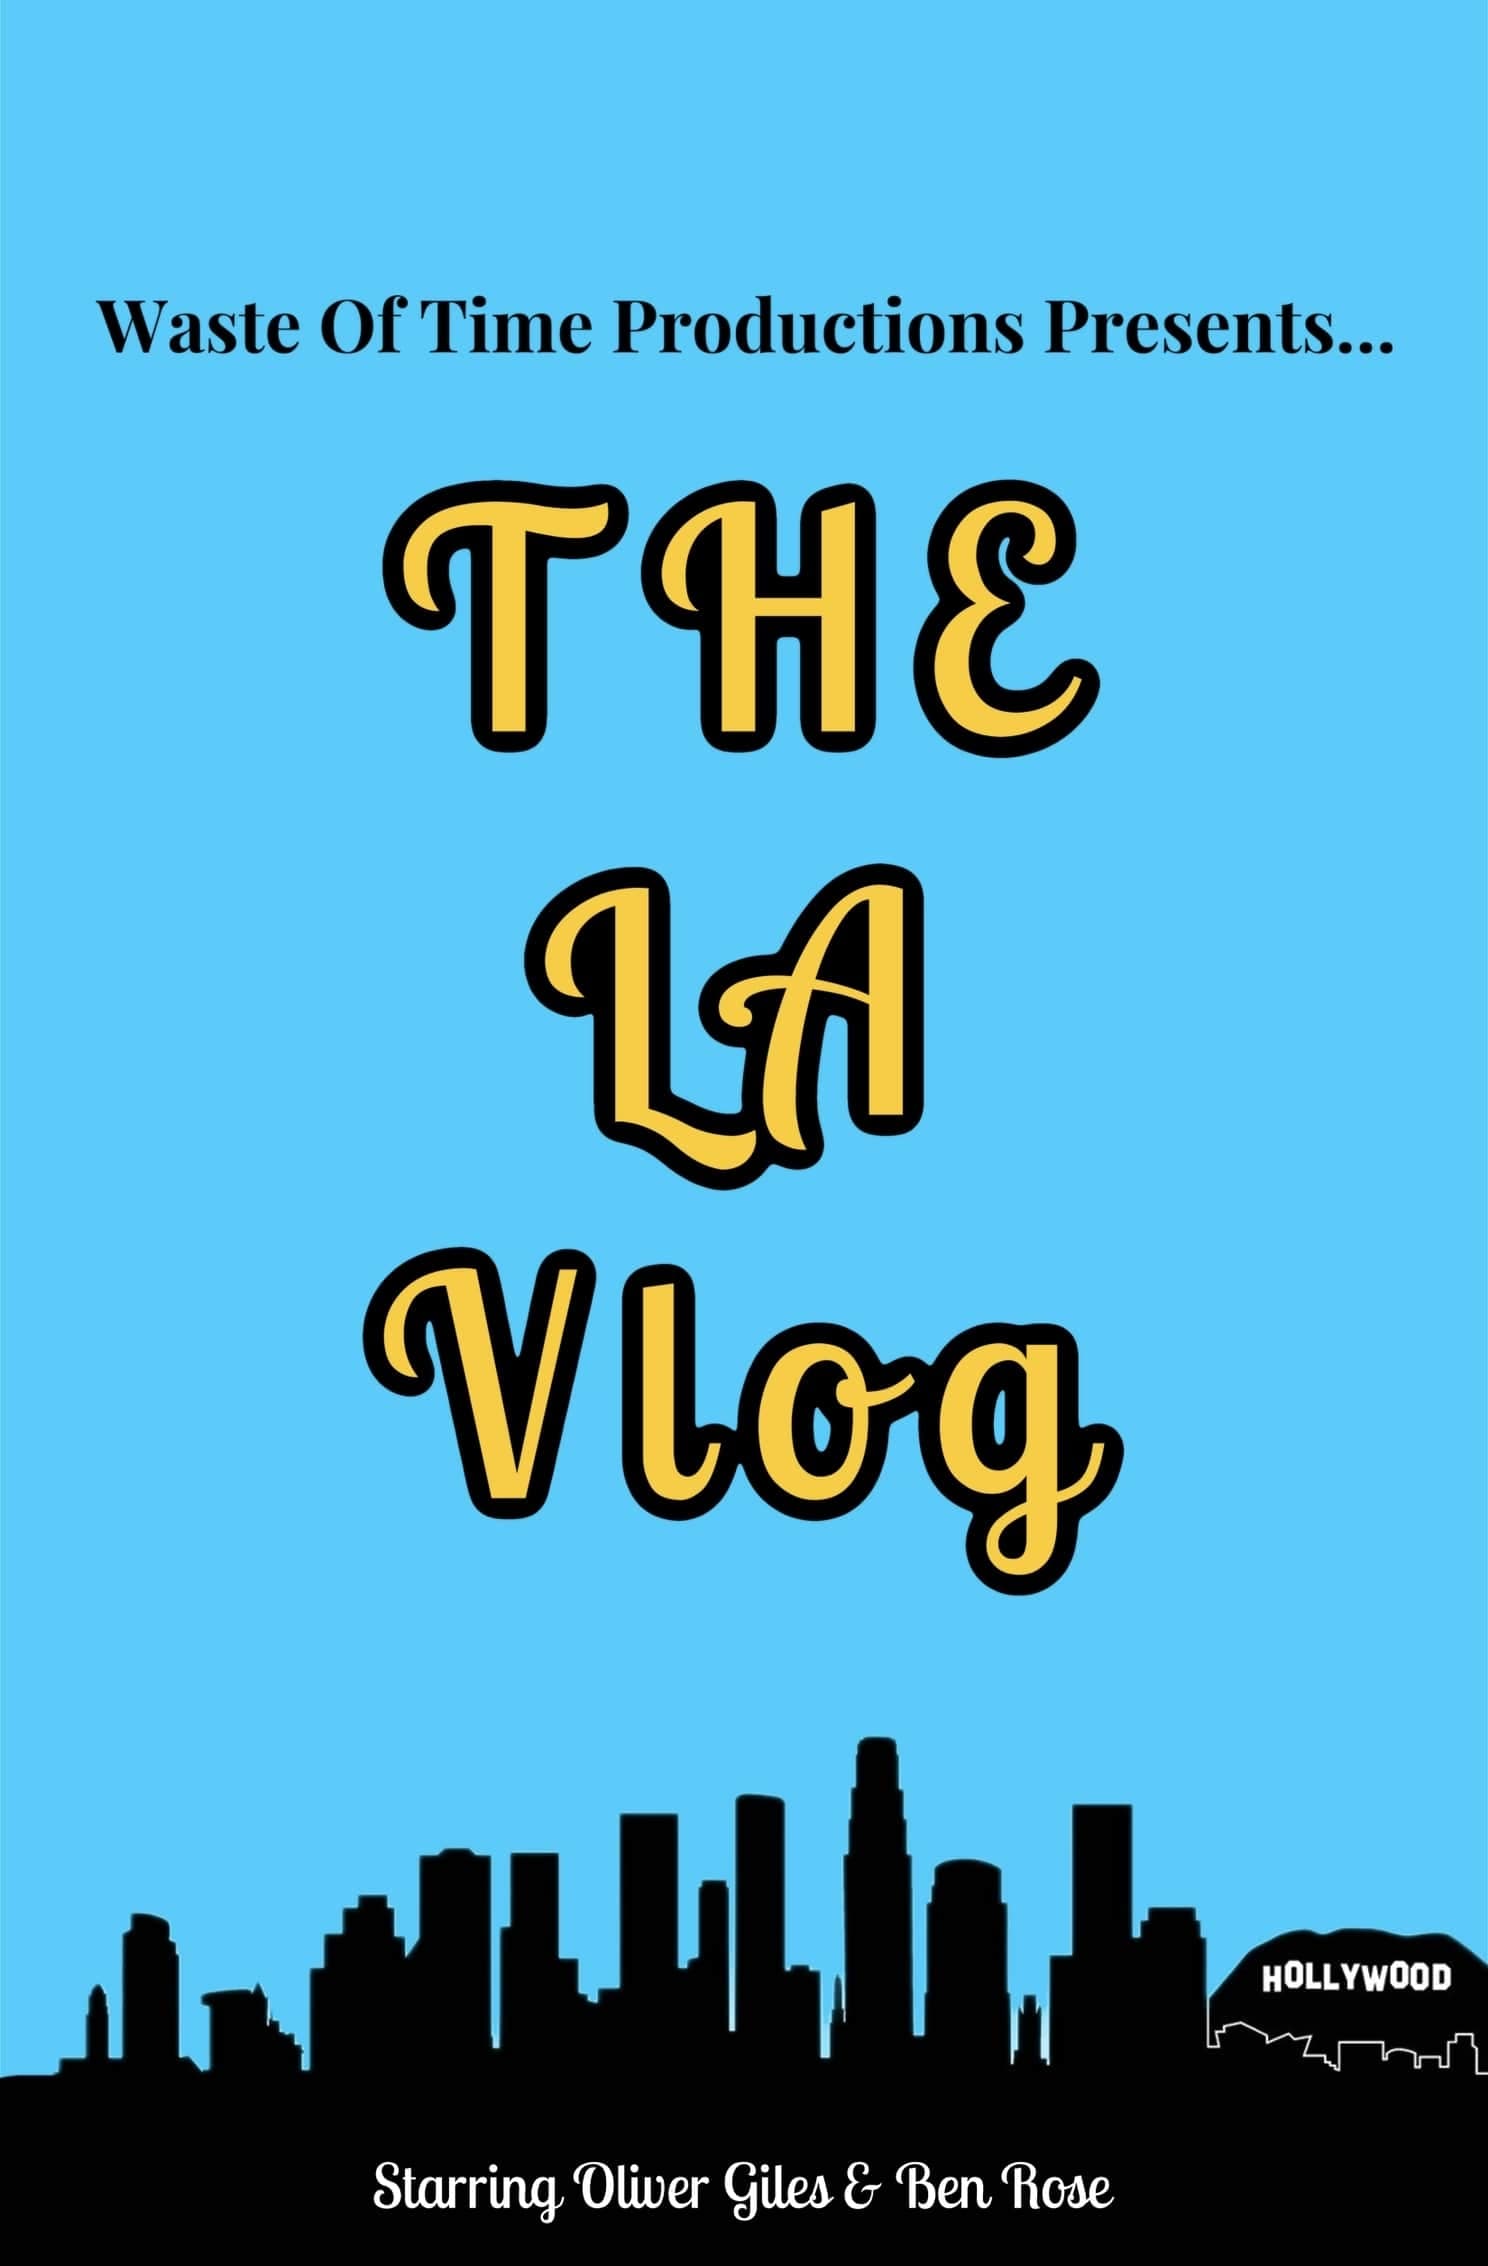 The LA Vlog